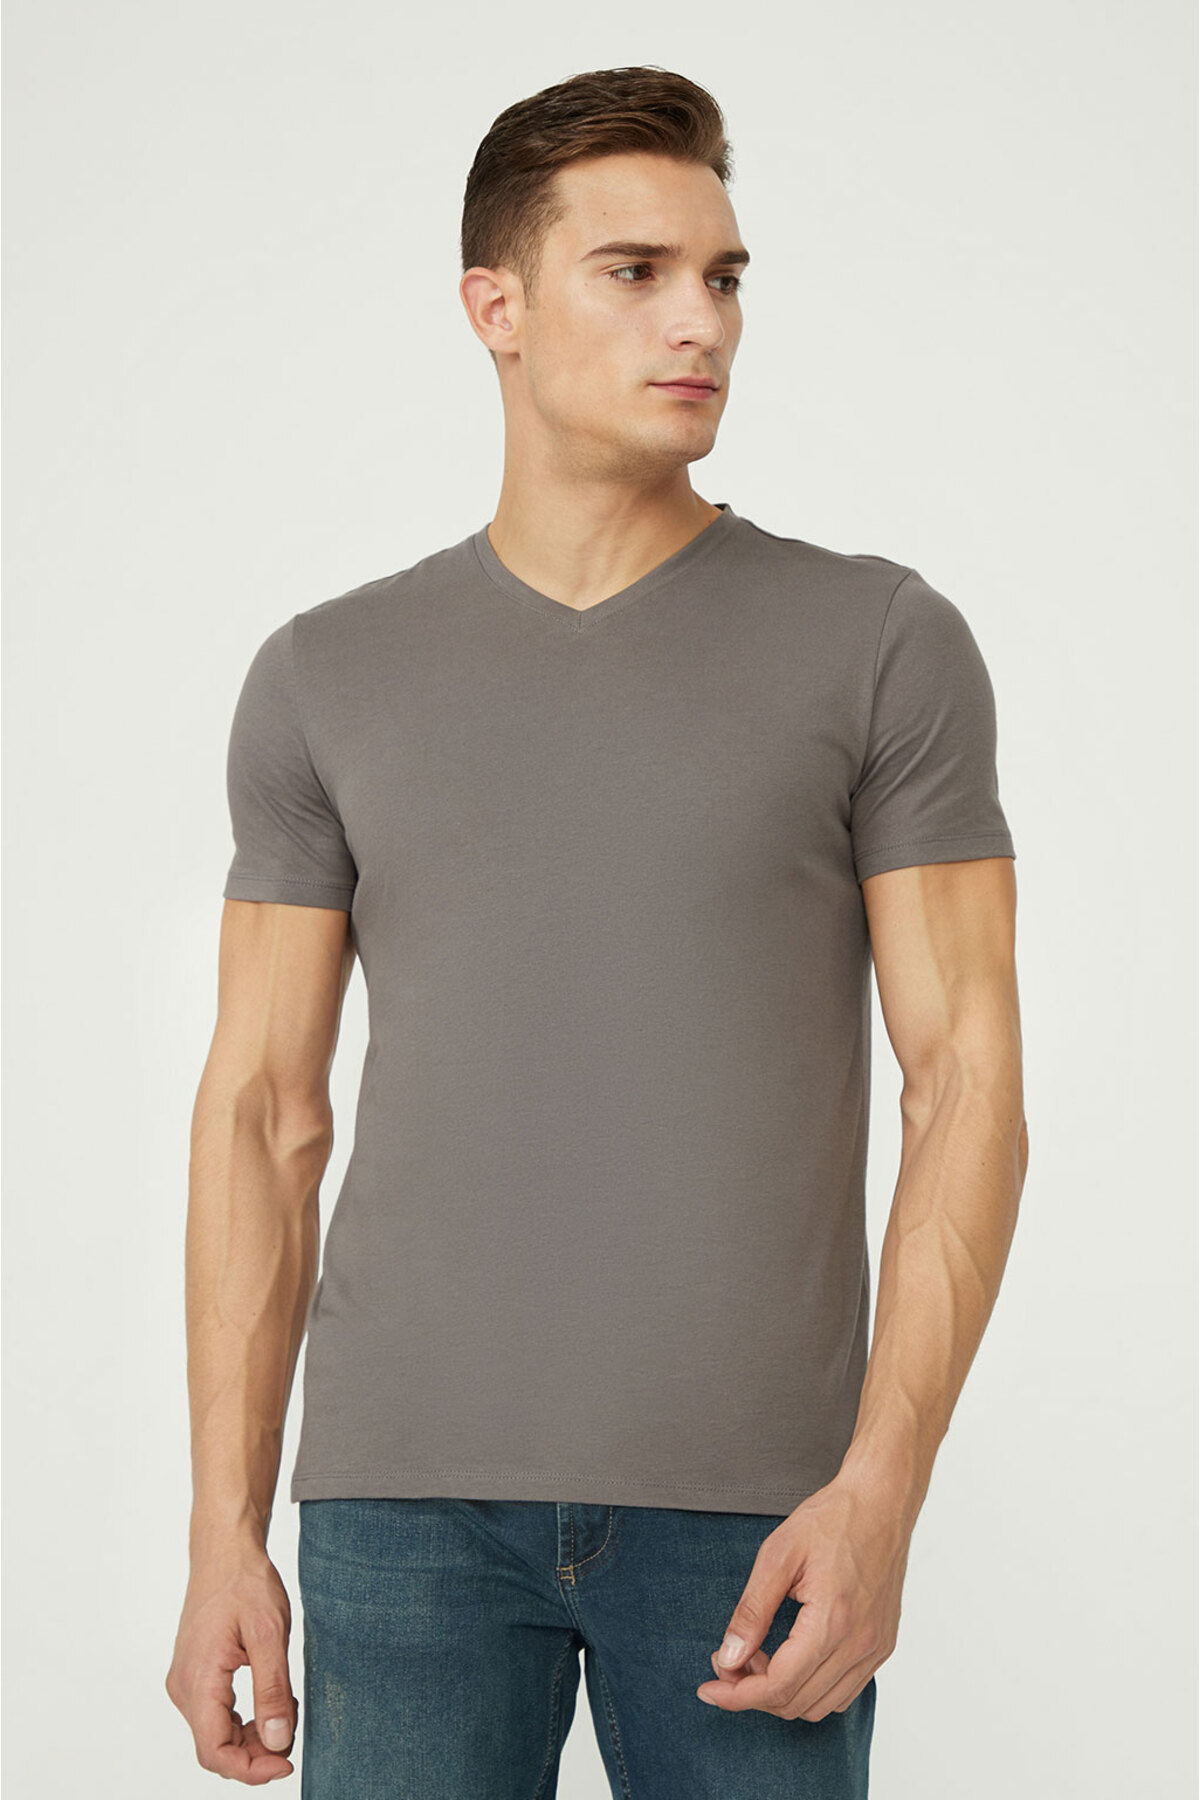 Avva Men's Anthracite 100% Cotton V-Neck Standard Fit Regular Cut T-shirt